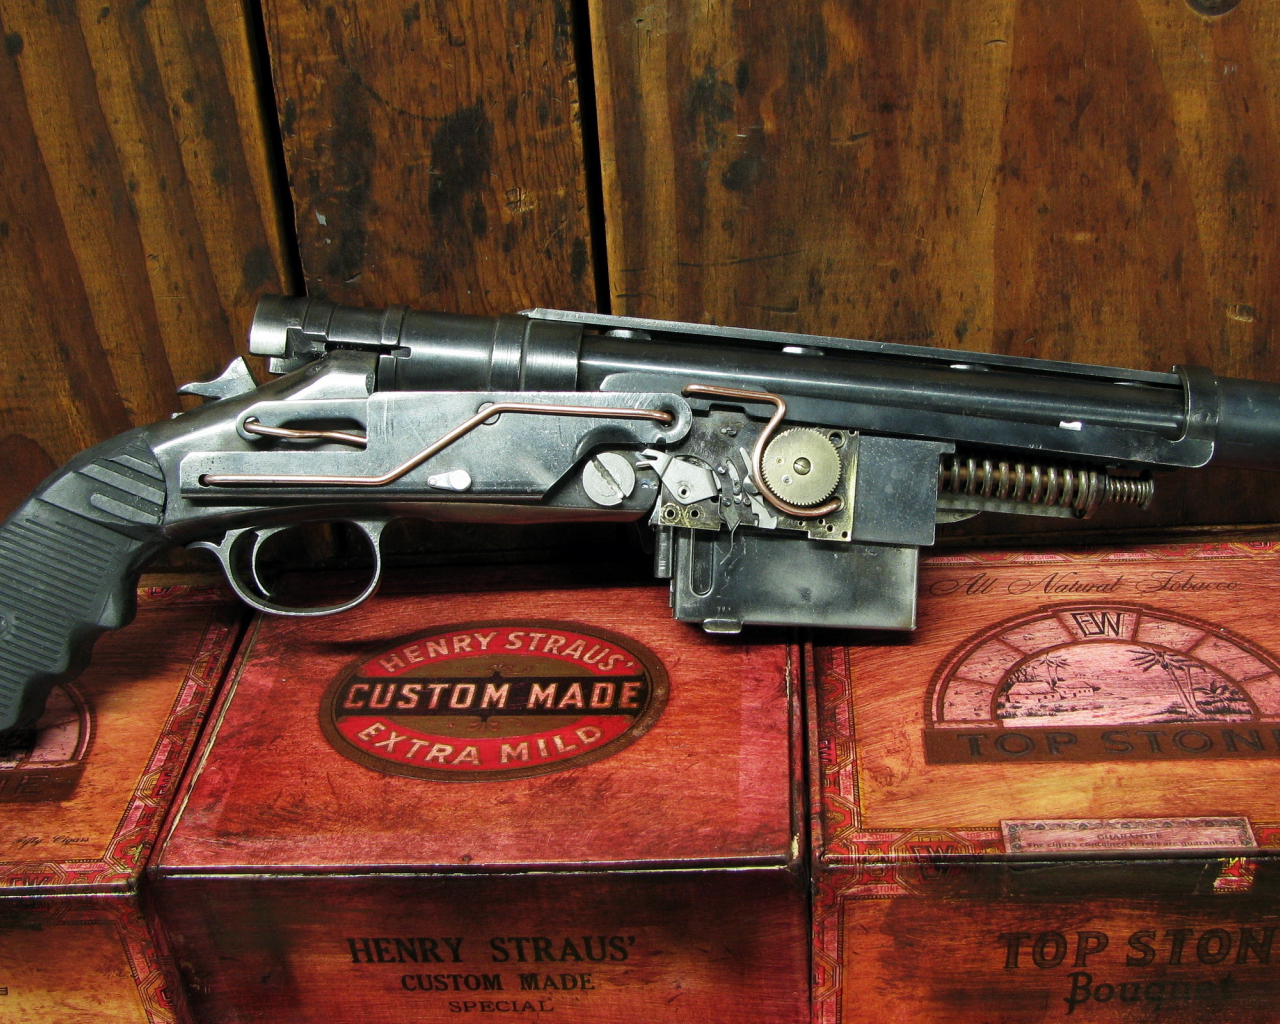 grand approximiser 3 shot pistole, gun, steampunk